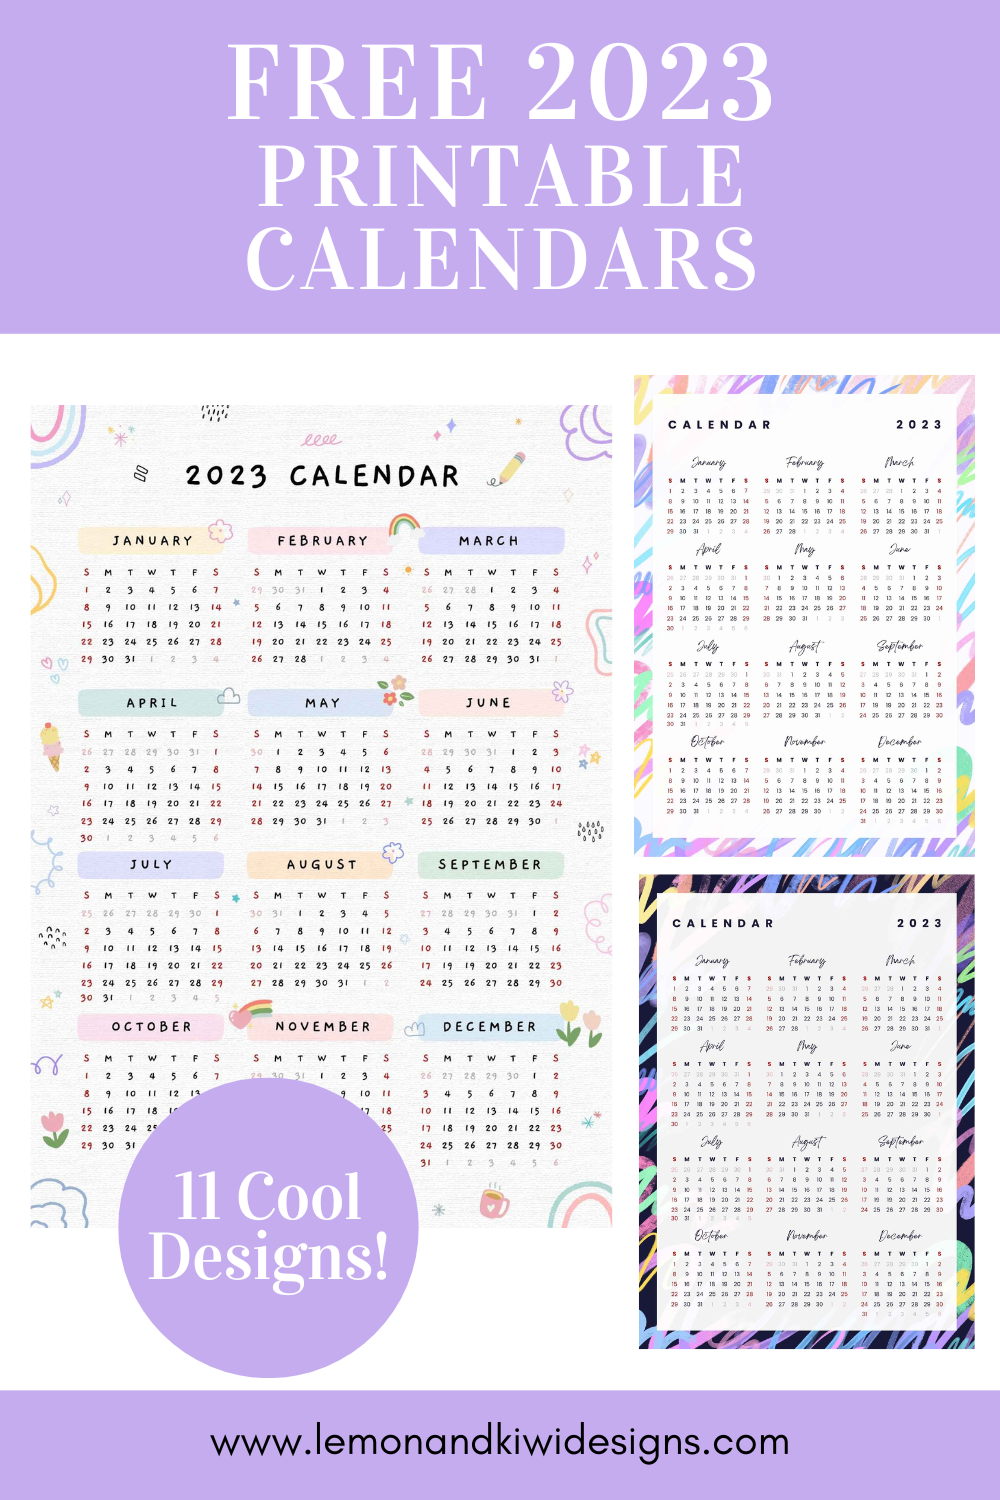 Free 2023 Printable Calendars (11 Printable One-Page Calendar Templates)